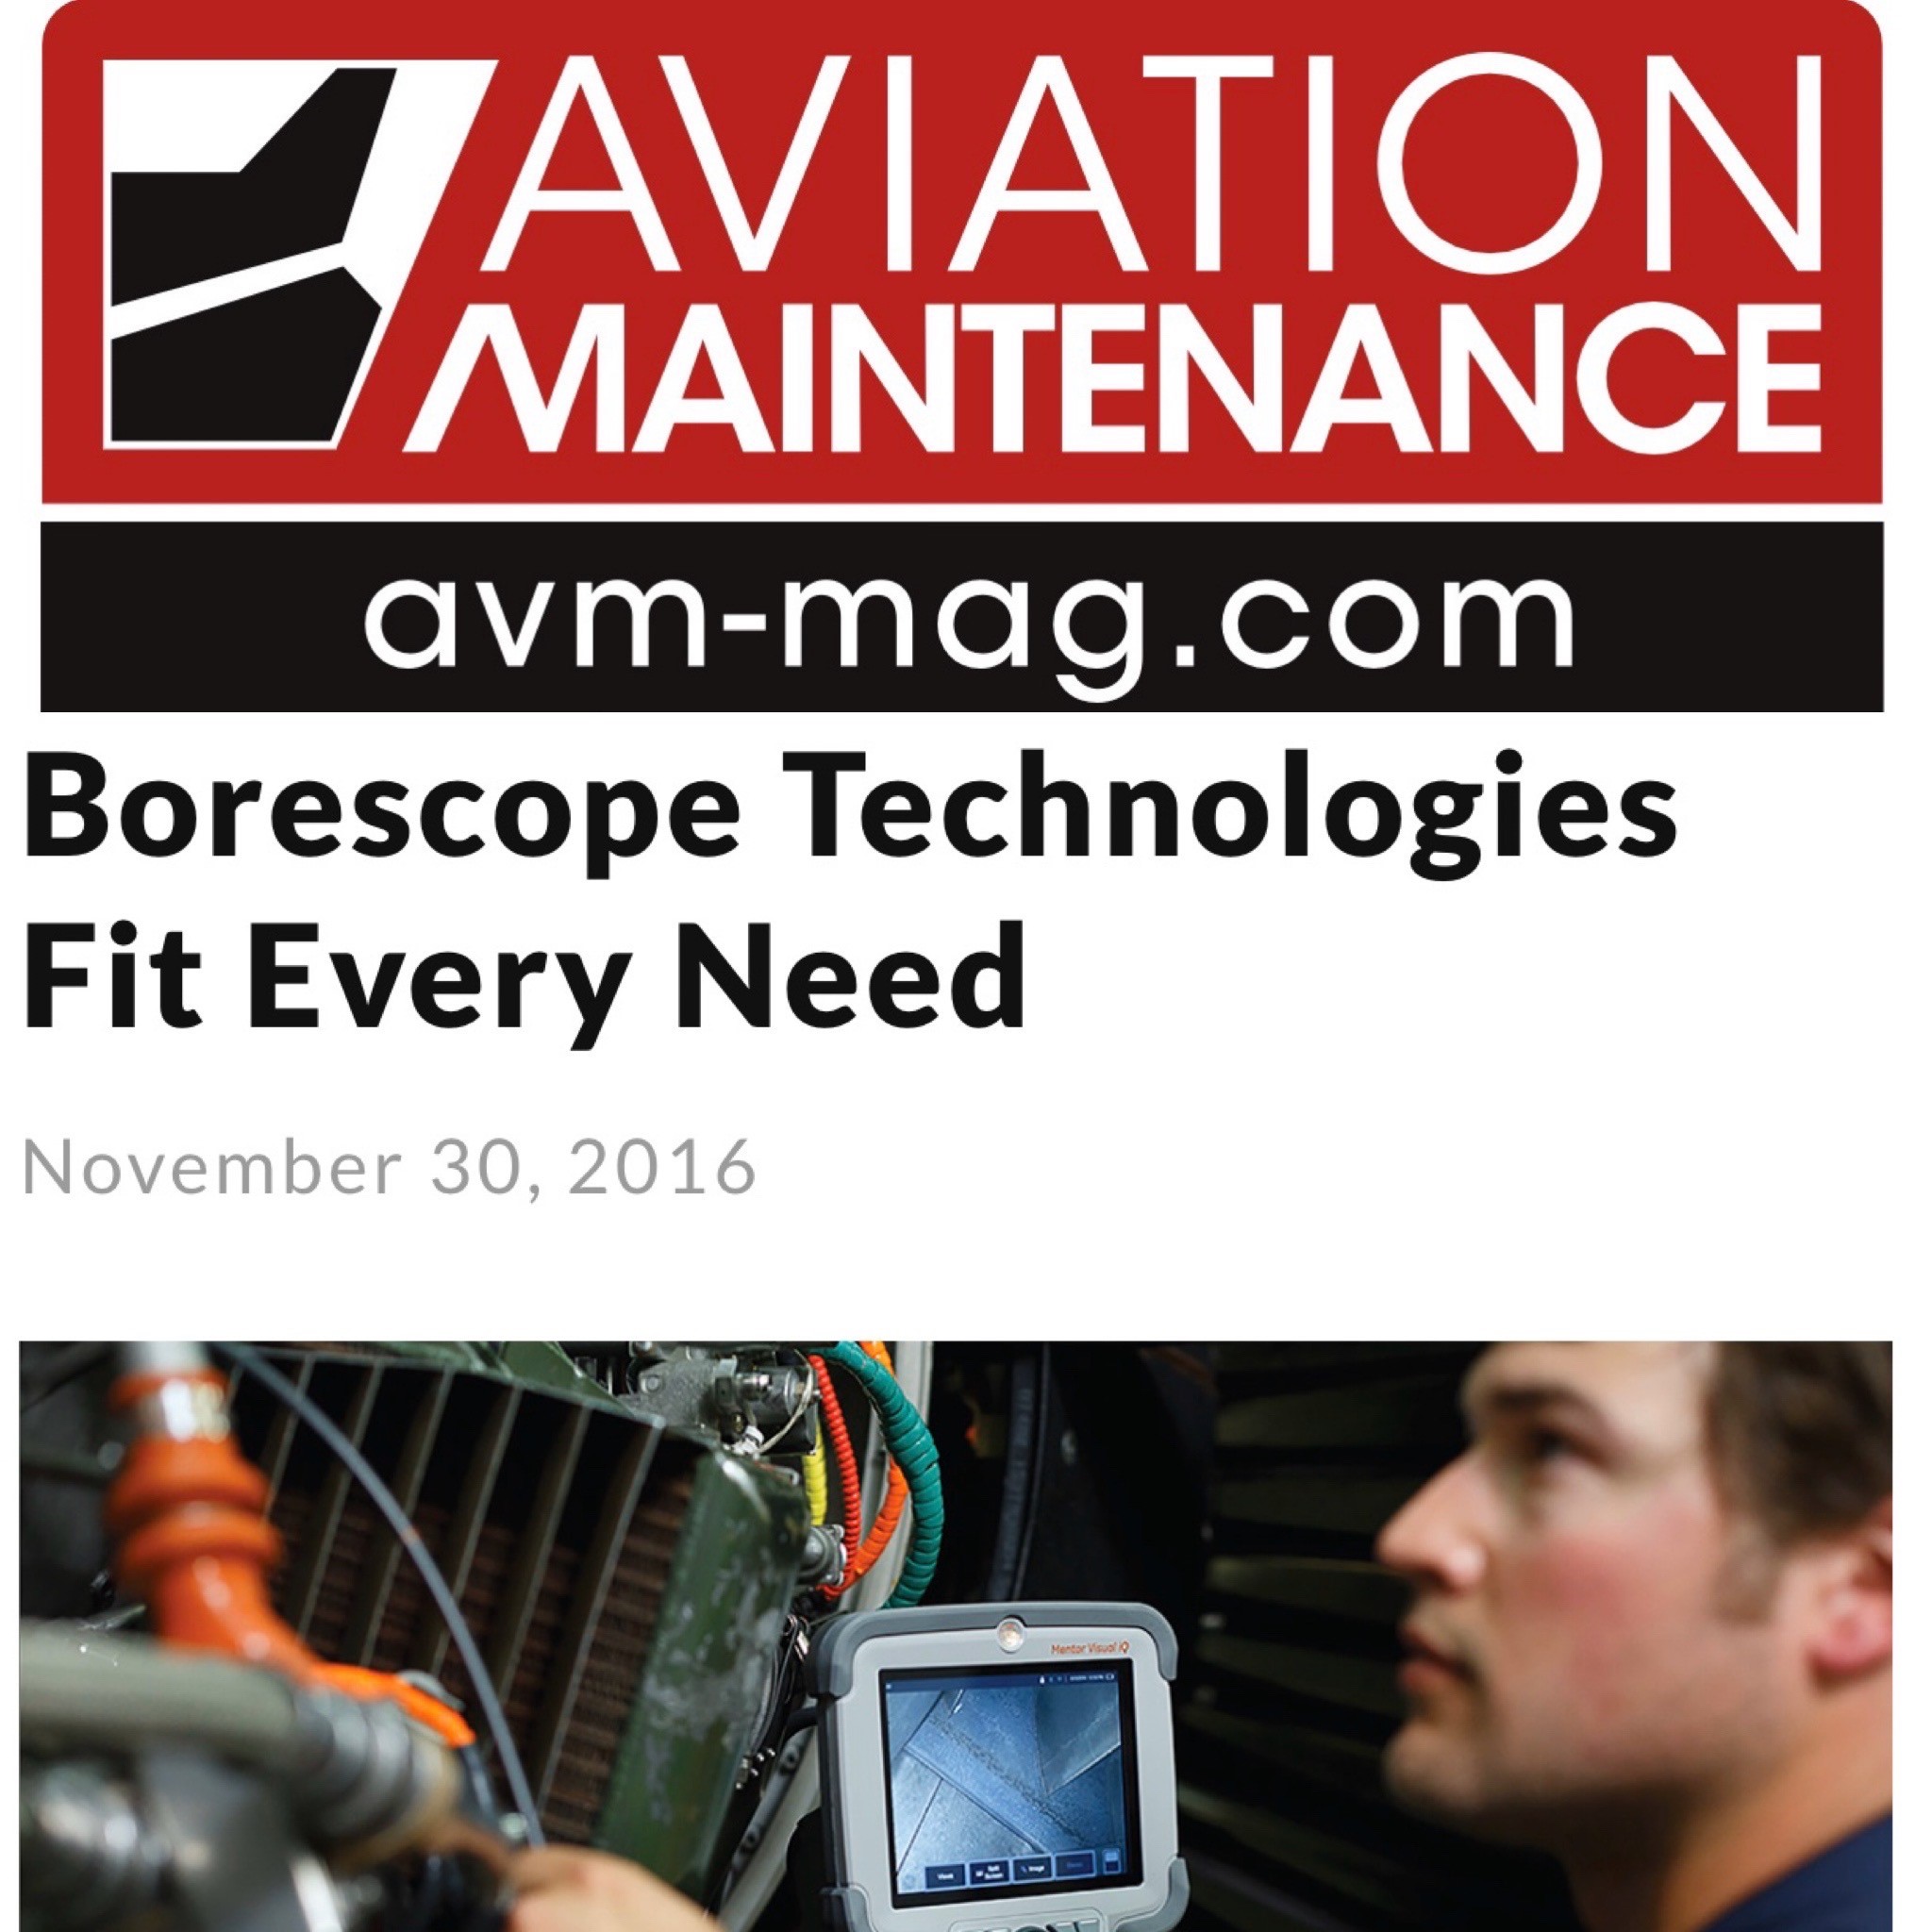 Aviation Maintenance Magazine ViewTech Borescopes Article